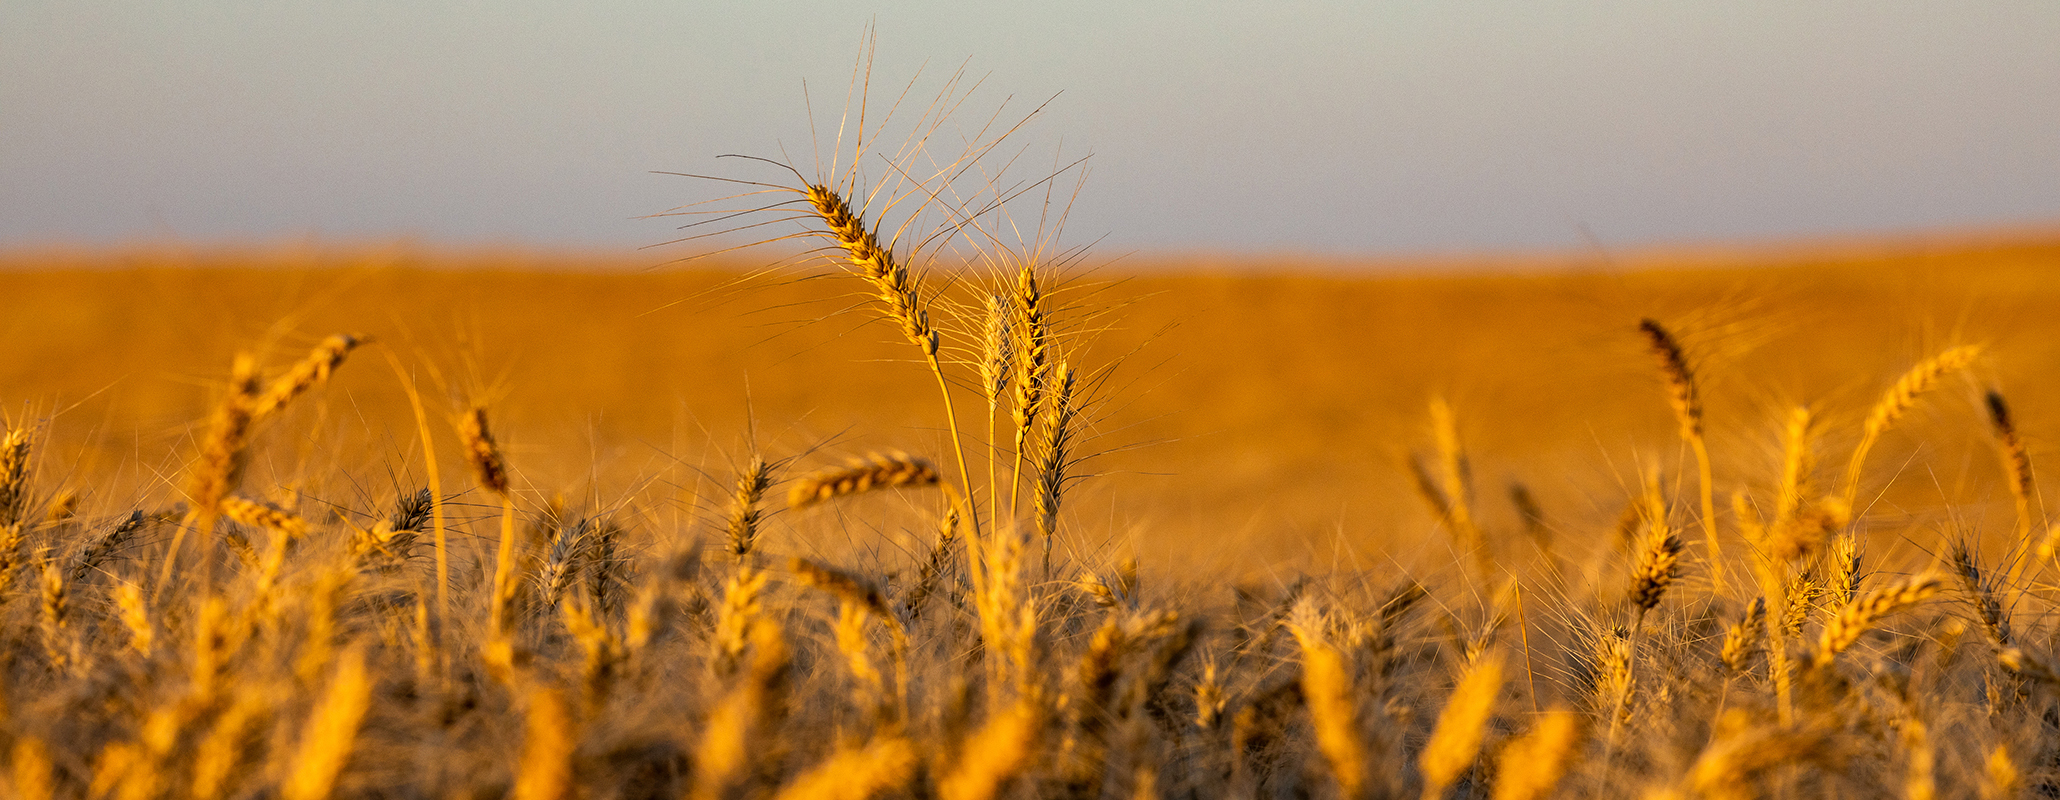 Stalk of wheat